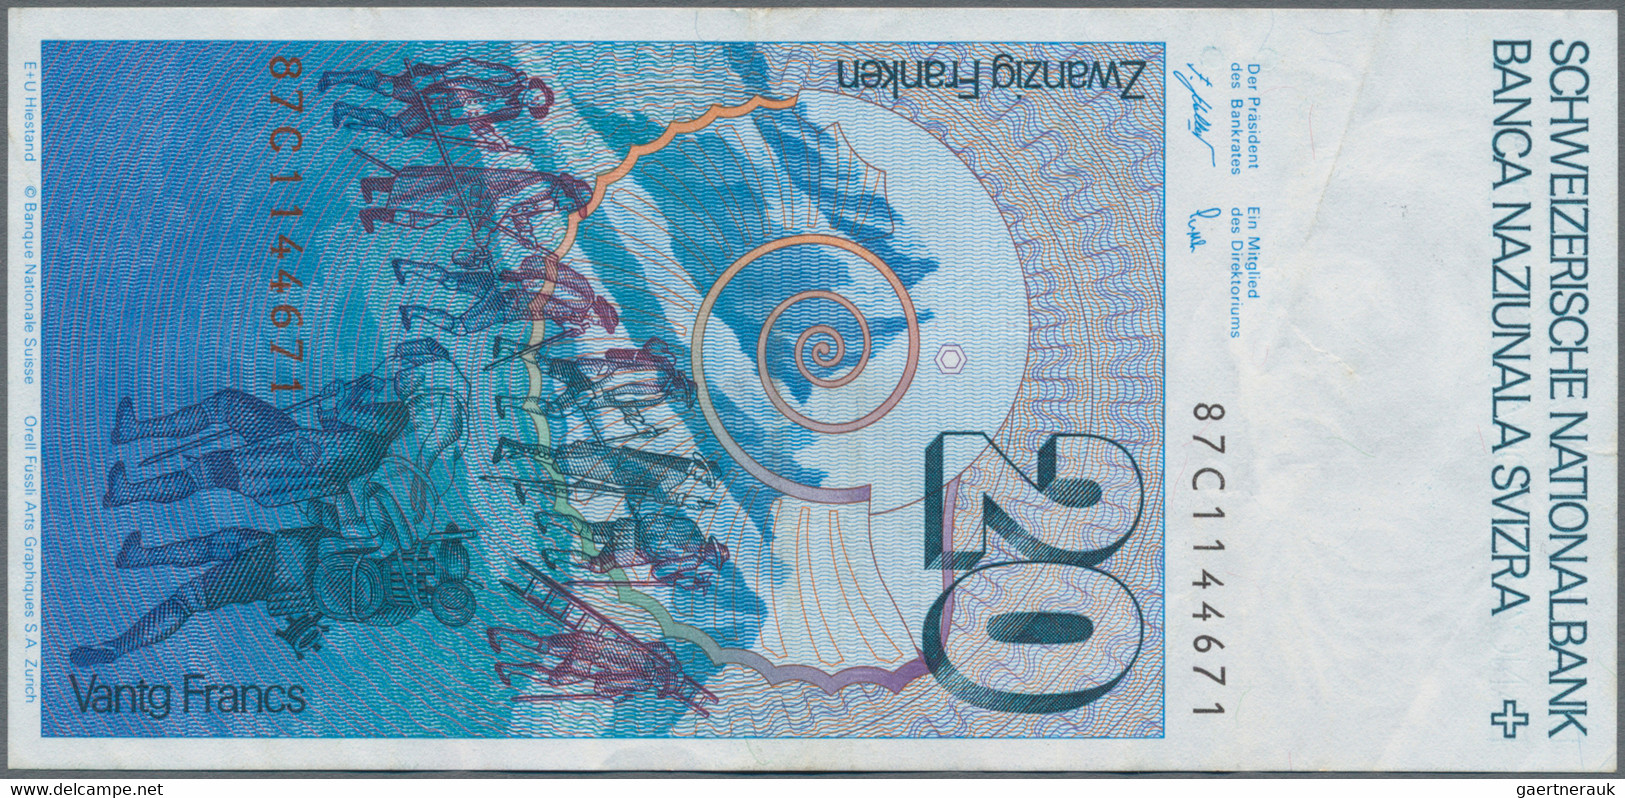 Switzerland / Schweiz: Nice set with 7 banknotes 20 Franken, dated 1980, 1981, 1982, 1987 and 1990,